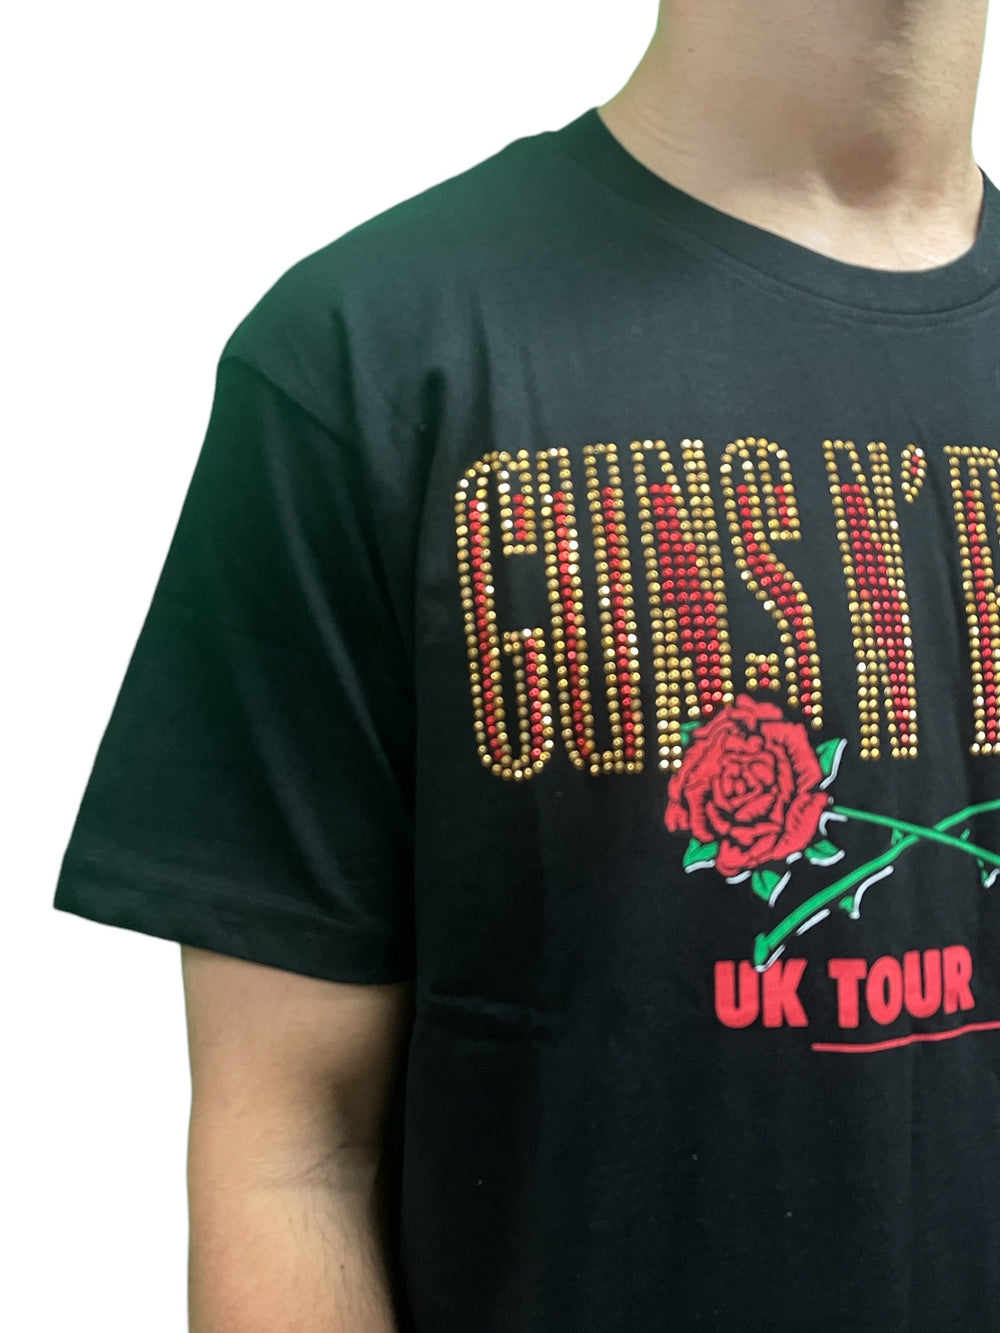 Guns N' Roses - '87 Tour  Logo Diamante Official Unisex T-Shirt Various Sizes